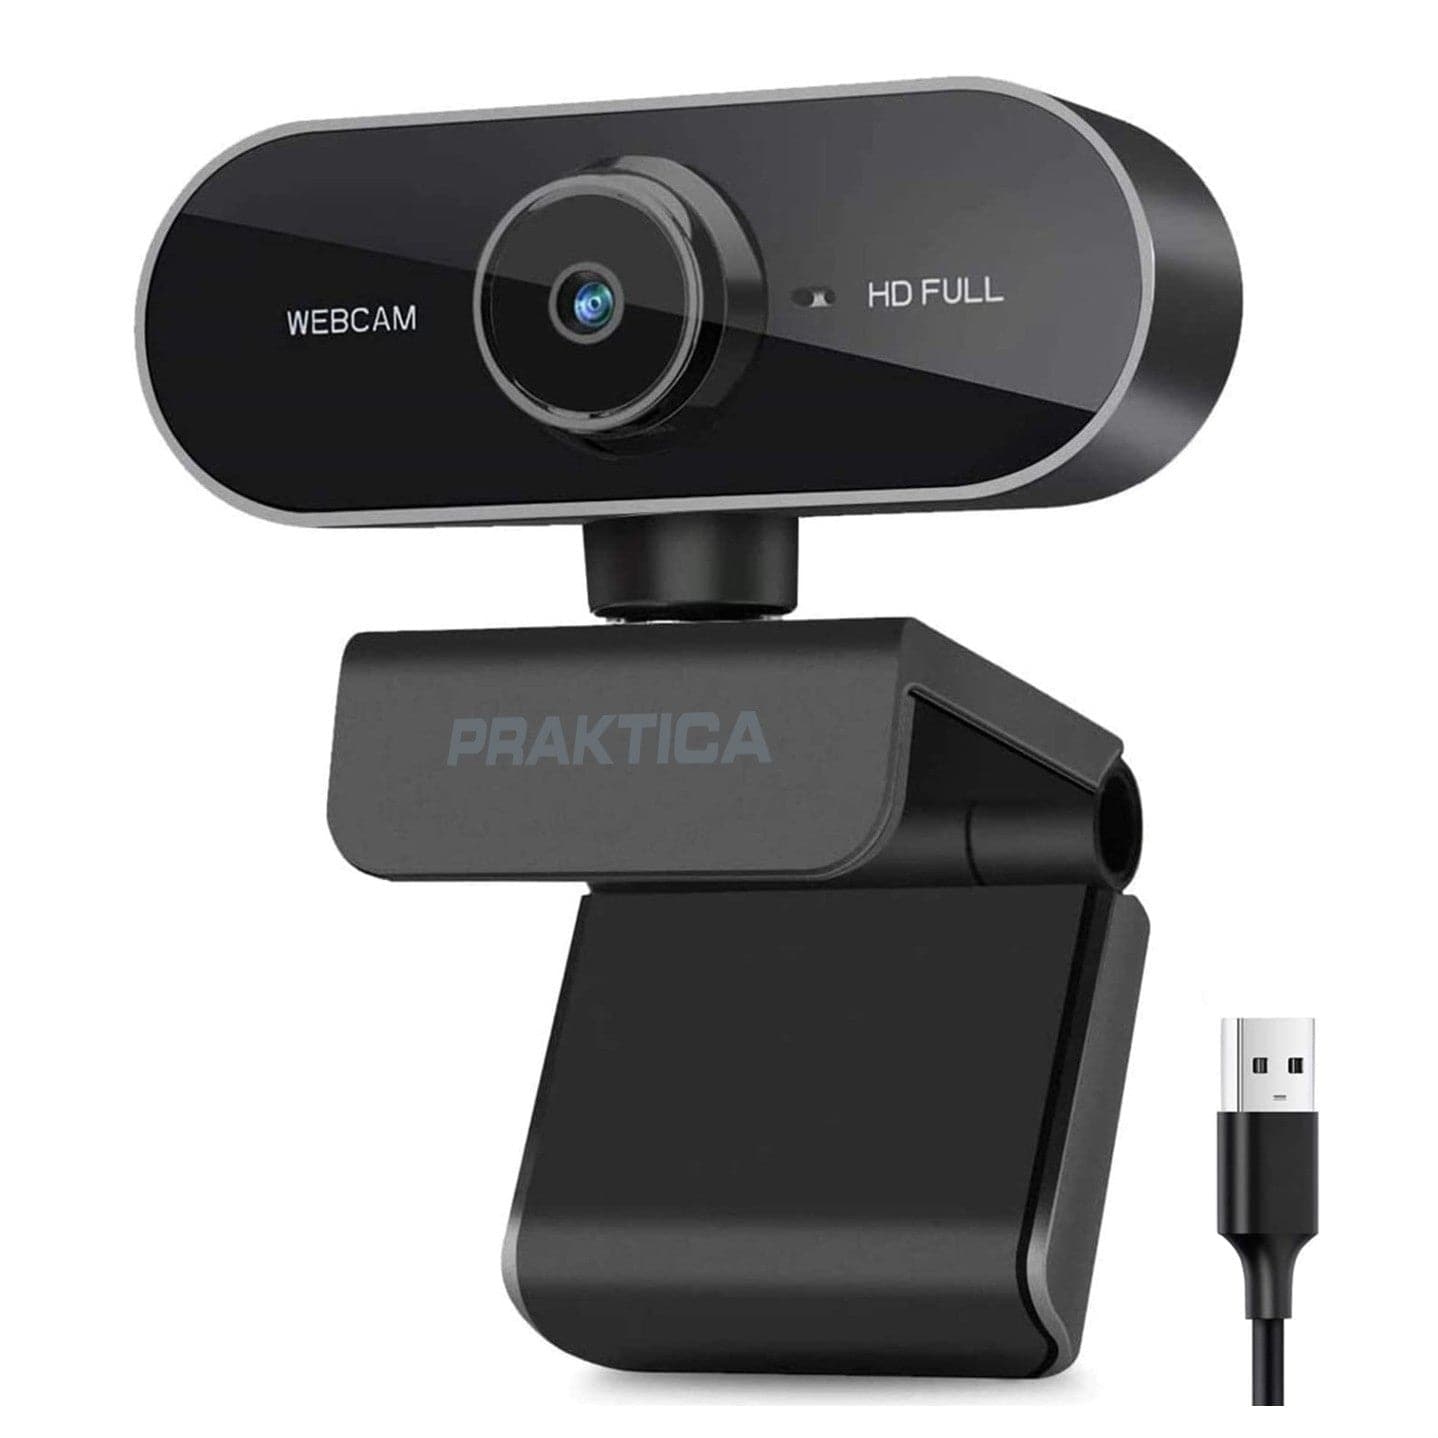 PRAKTICA Full HD 1080p Auto-Focus USB-A Webcam with Built-in Microphone & Tripod Mount